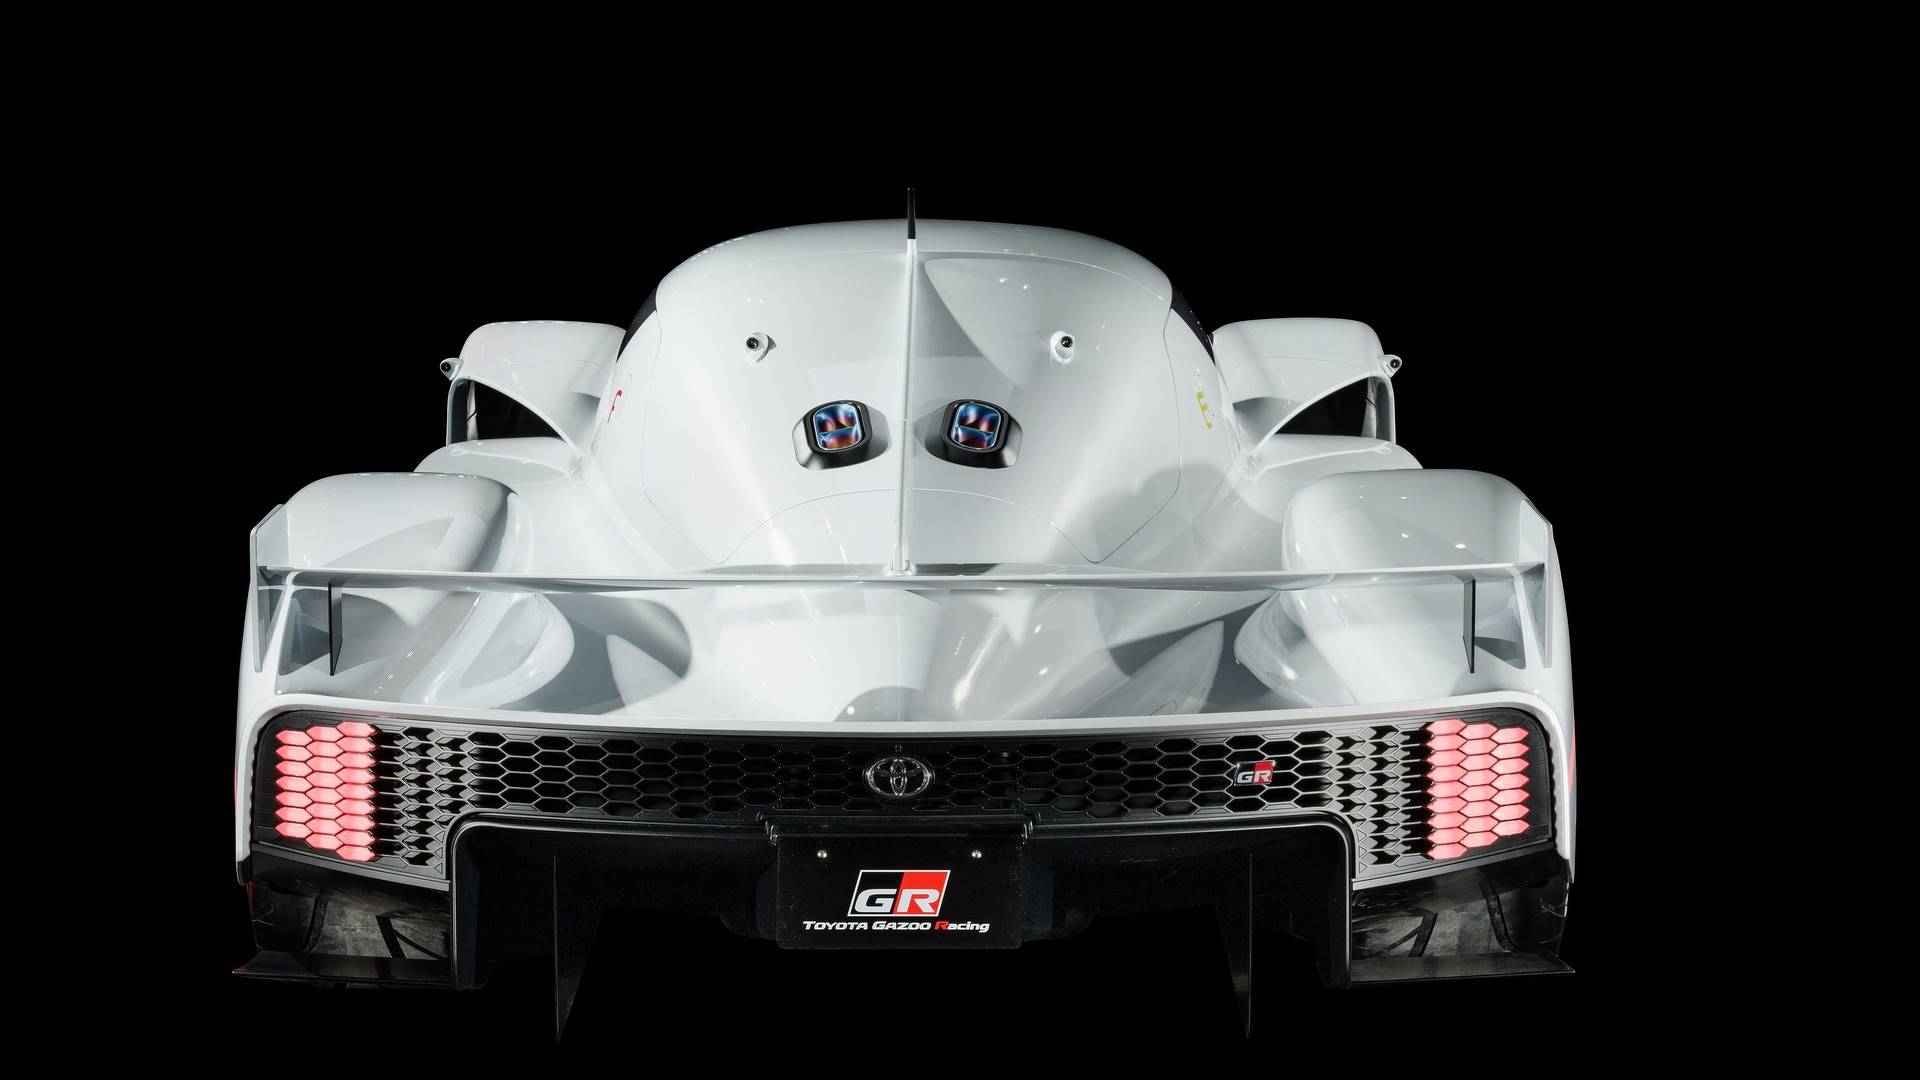 Toyota Gr Hybrid Le Mans Hypercar Unveiled With Gr Super Sport